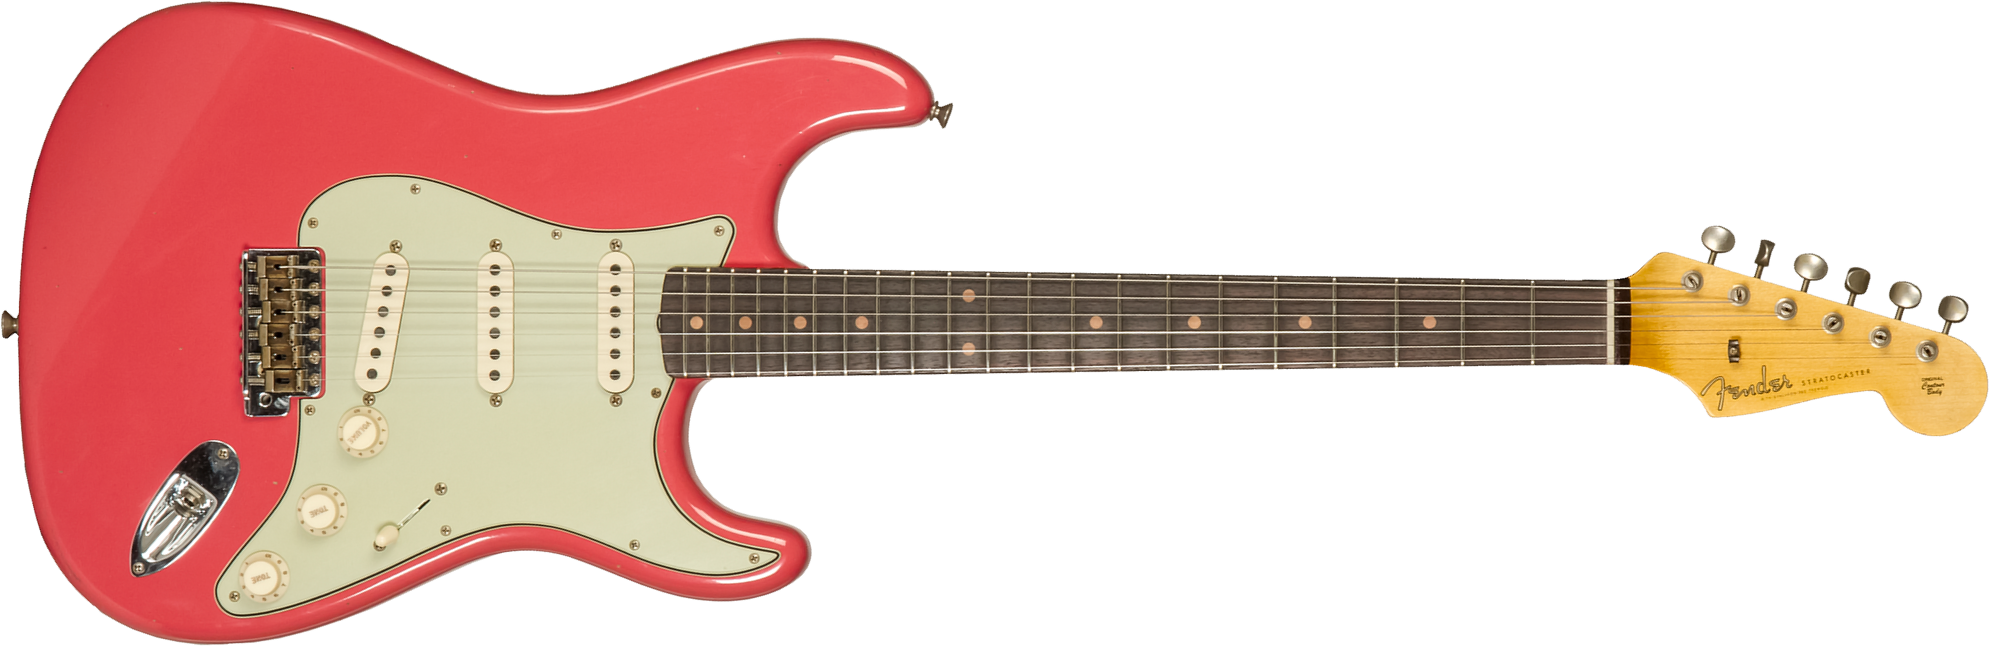 Fender Custom Shop Strat 1959 3s Trem Rw #cz571088 - Journeyman Relic Aged Fiesta Red - Guitarra eléctrica con forma de str. - Main picture